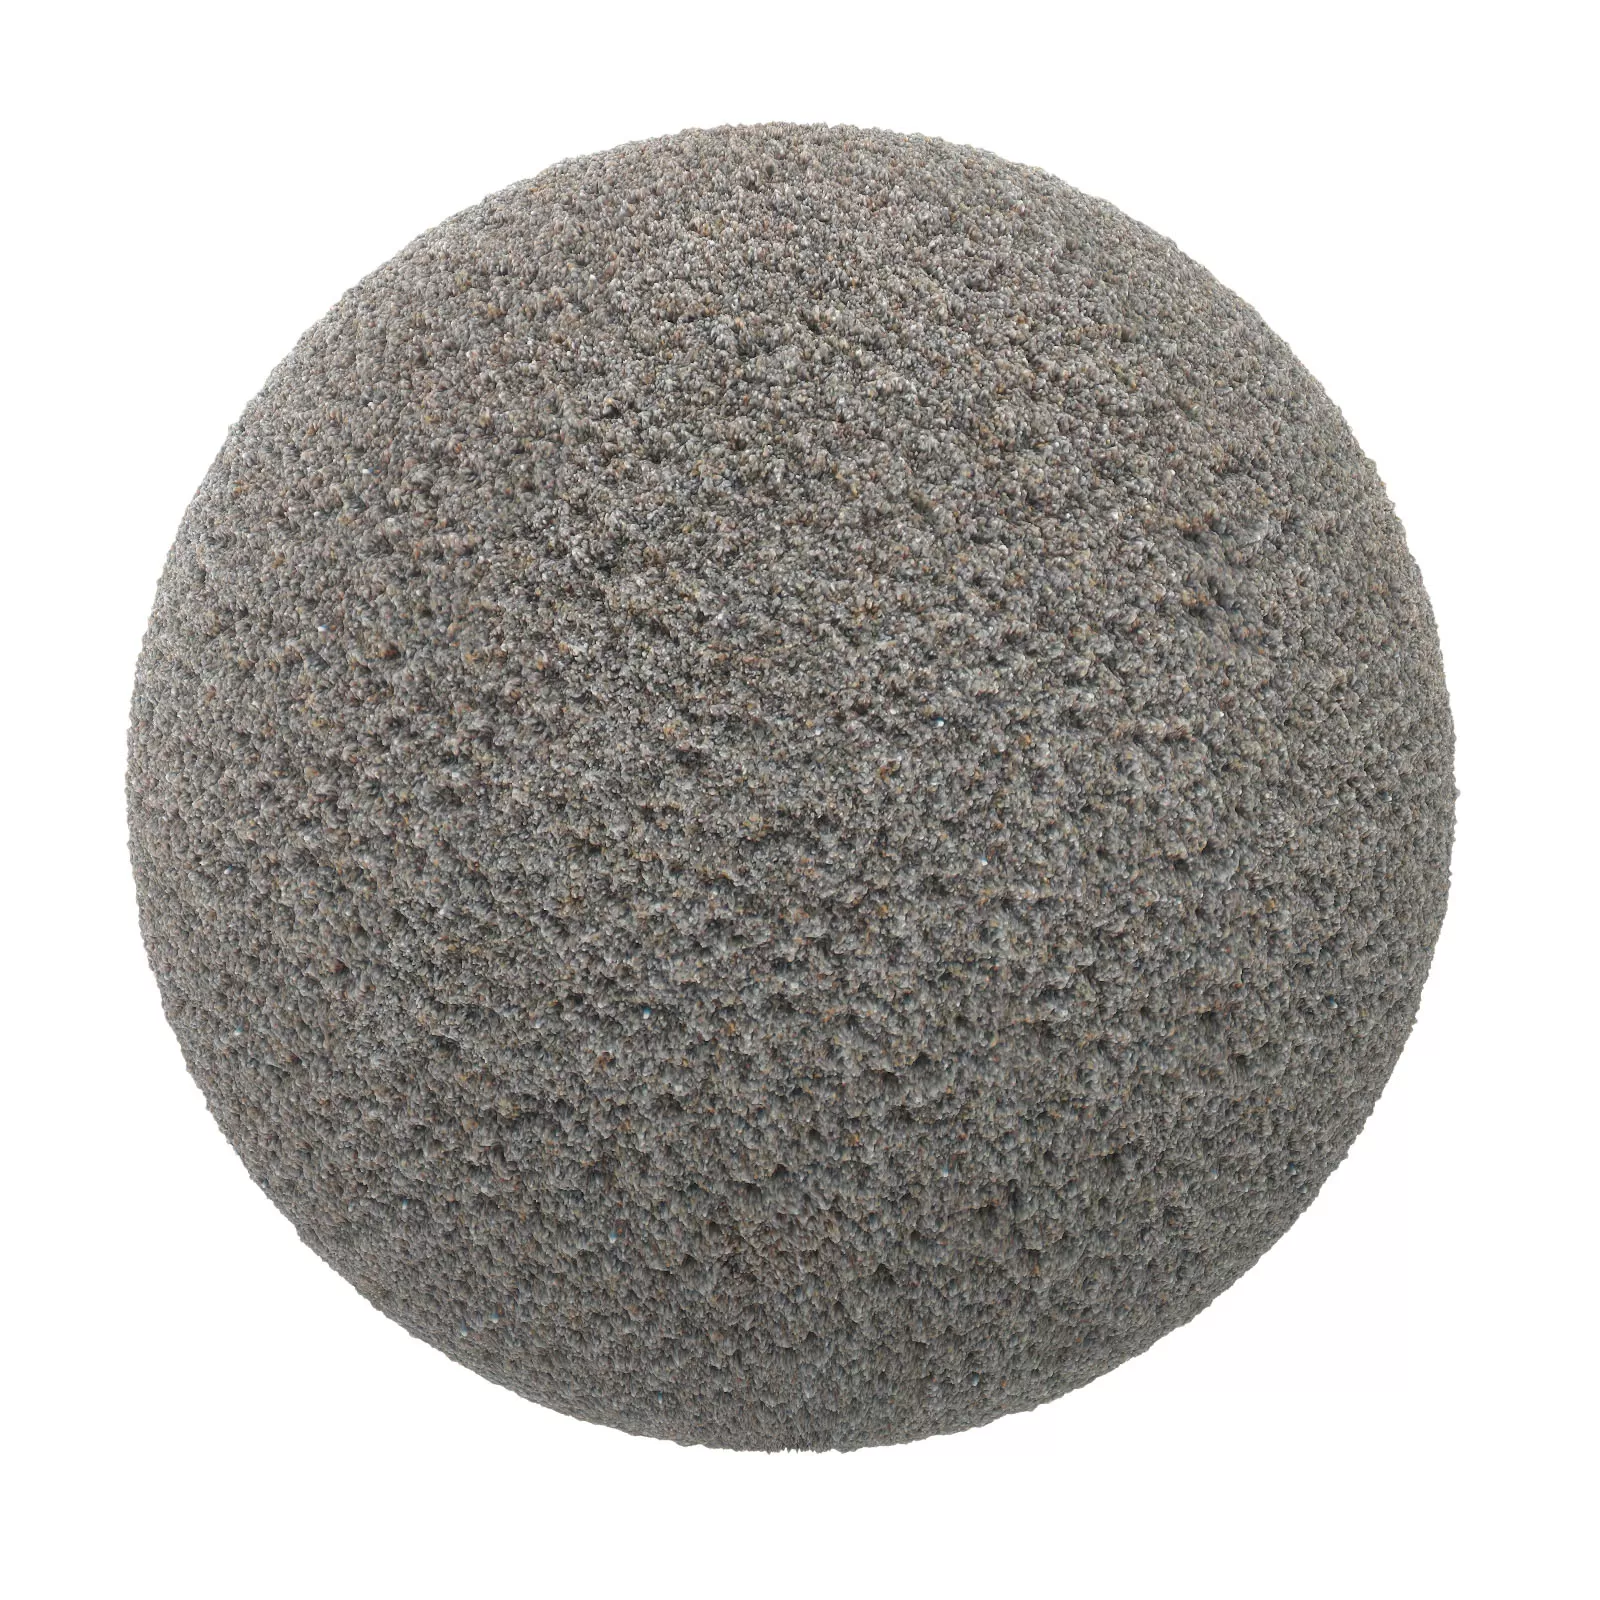 PBR CGAXIS TEXTURES – SOIL – Grey Sand 1